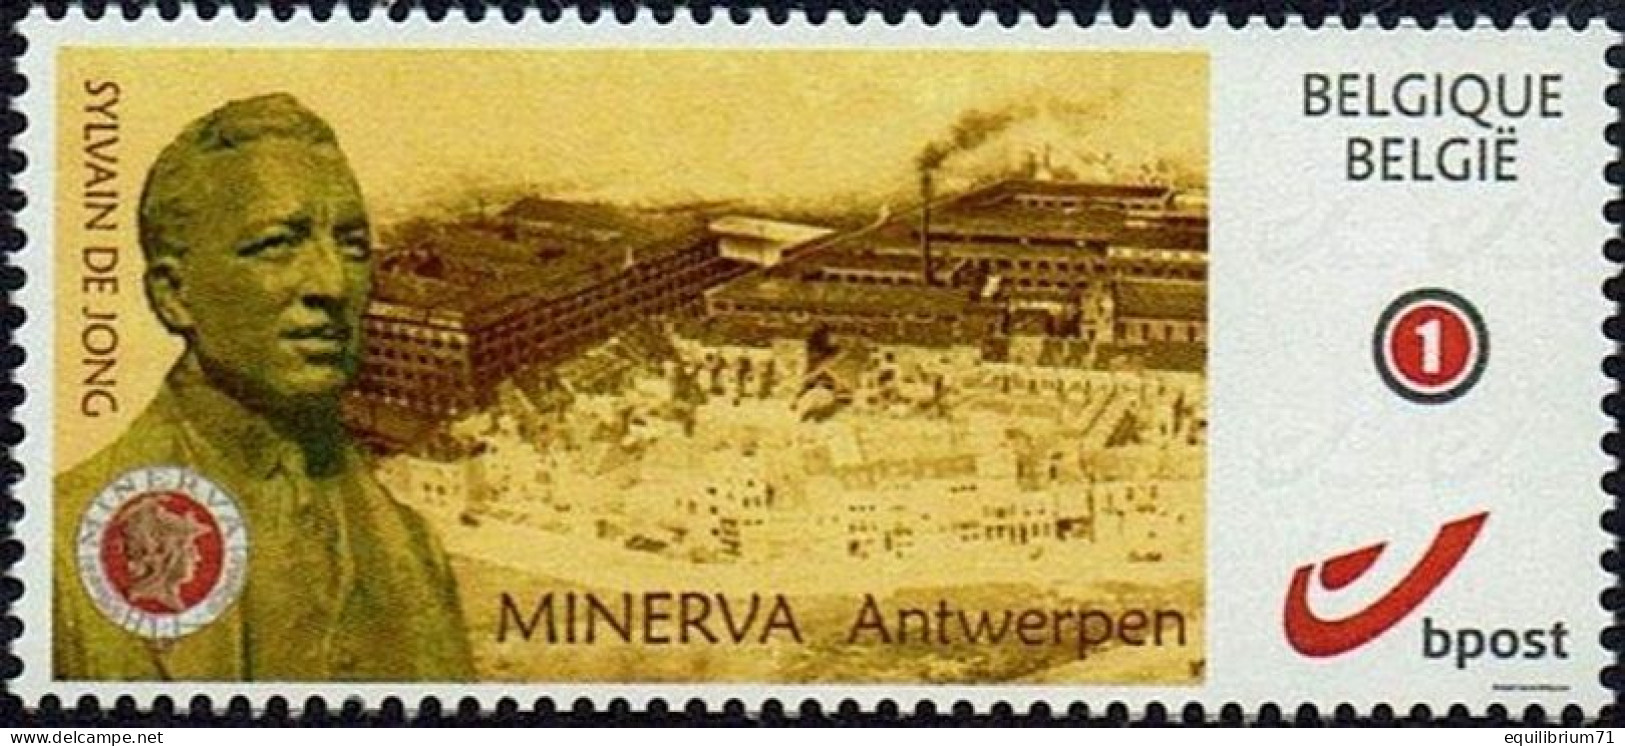 DUOSTAMP** / MYSTAMP** - Minerva 1897 - Fondé Par / Opgericht Door / Gegründet Von / Founded By - Sylvain De Jong - Usines & Industries